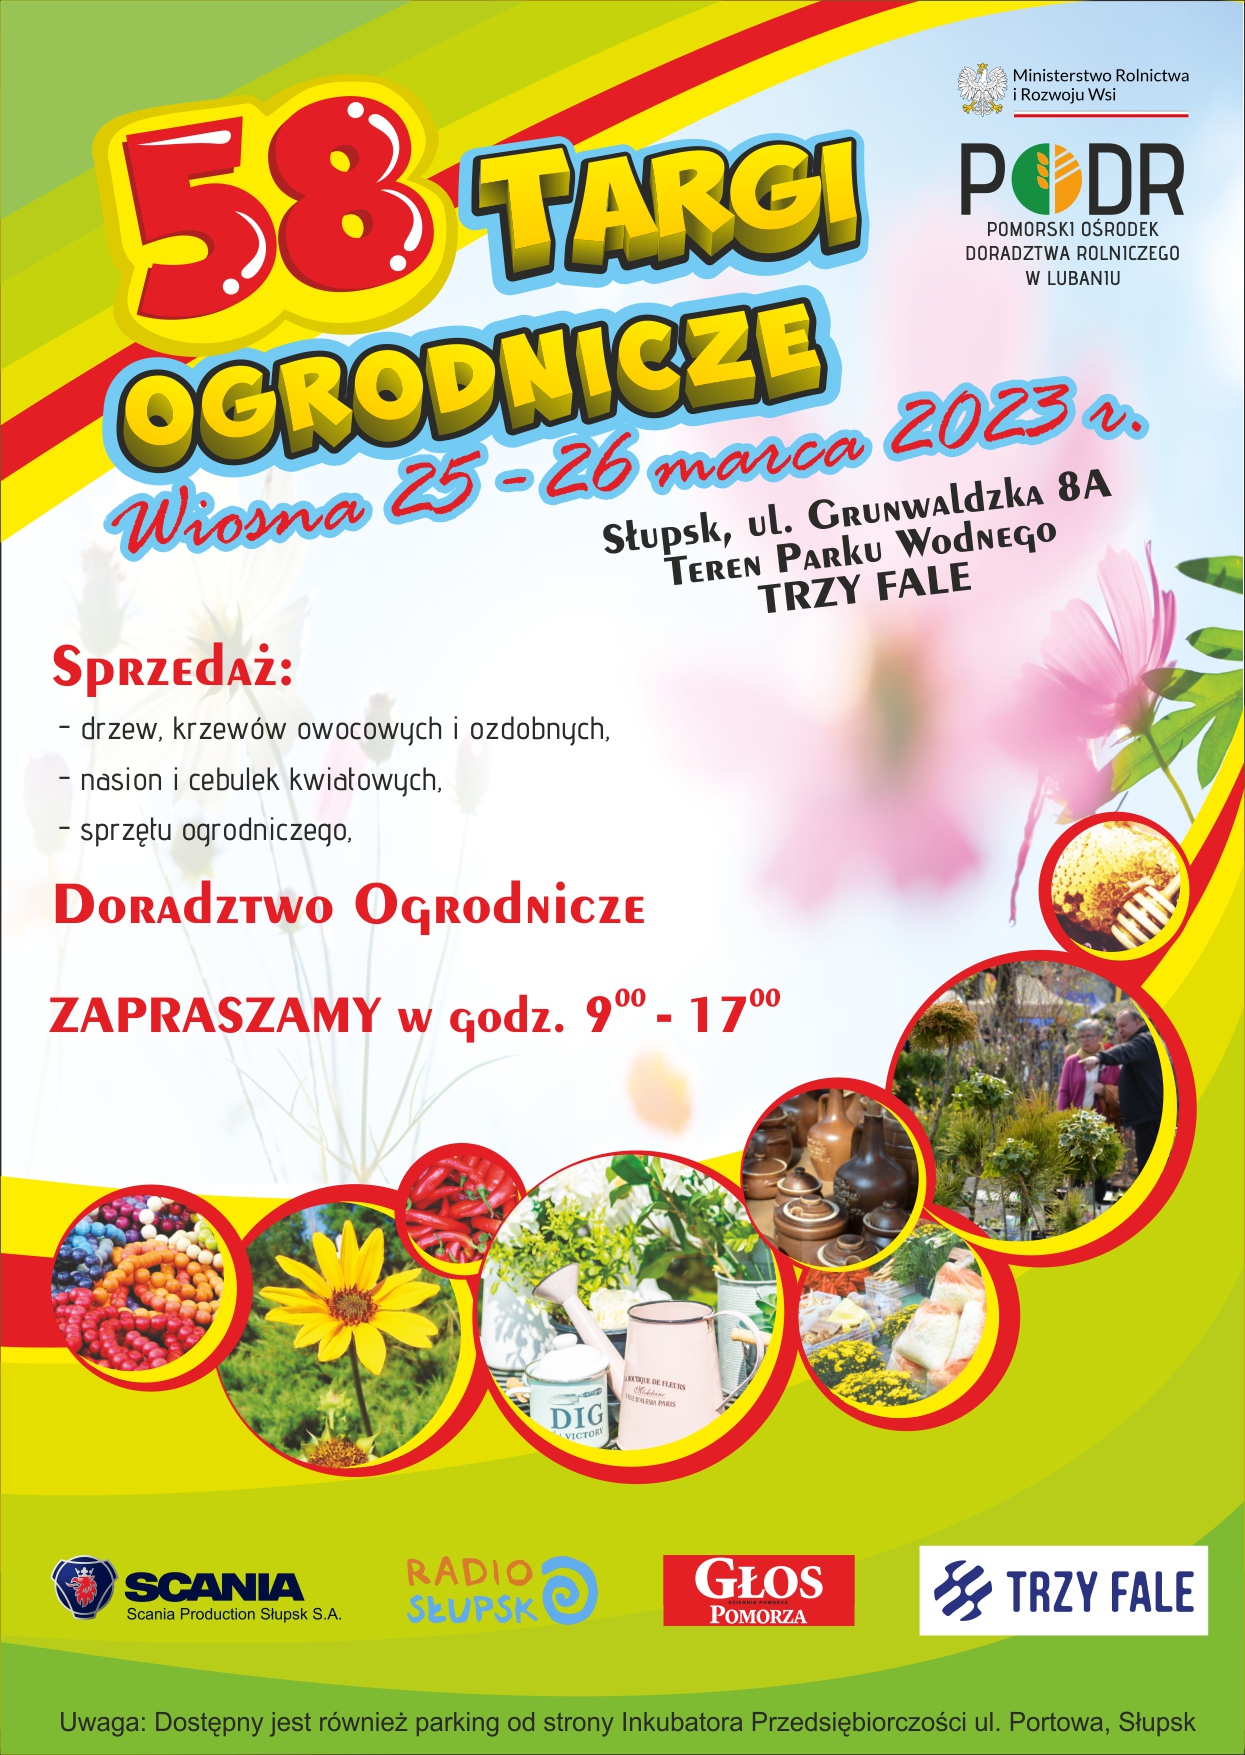 Targi Ogrodnicze “Wiosna 2023” – plakat